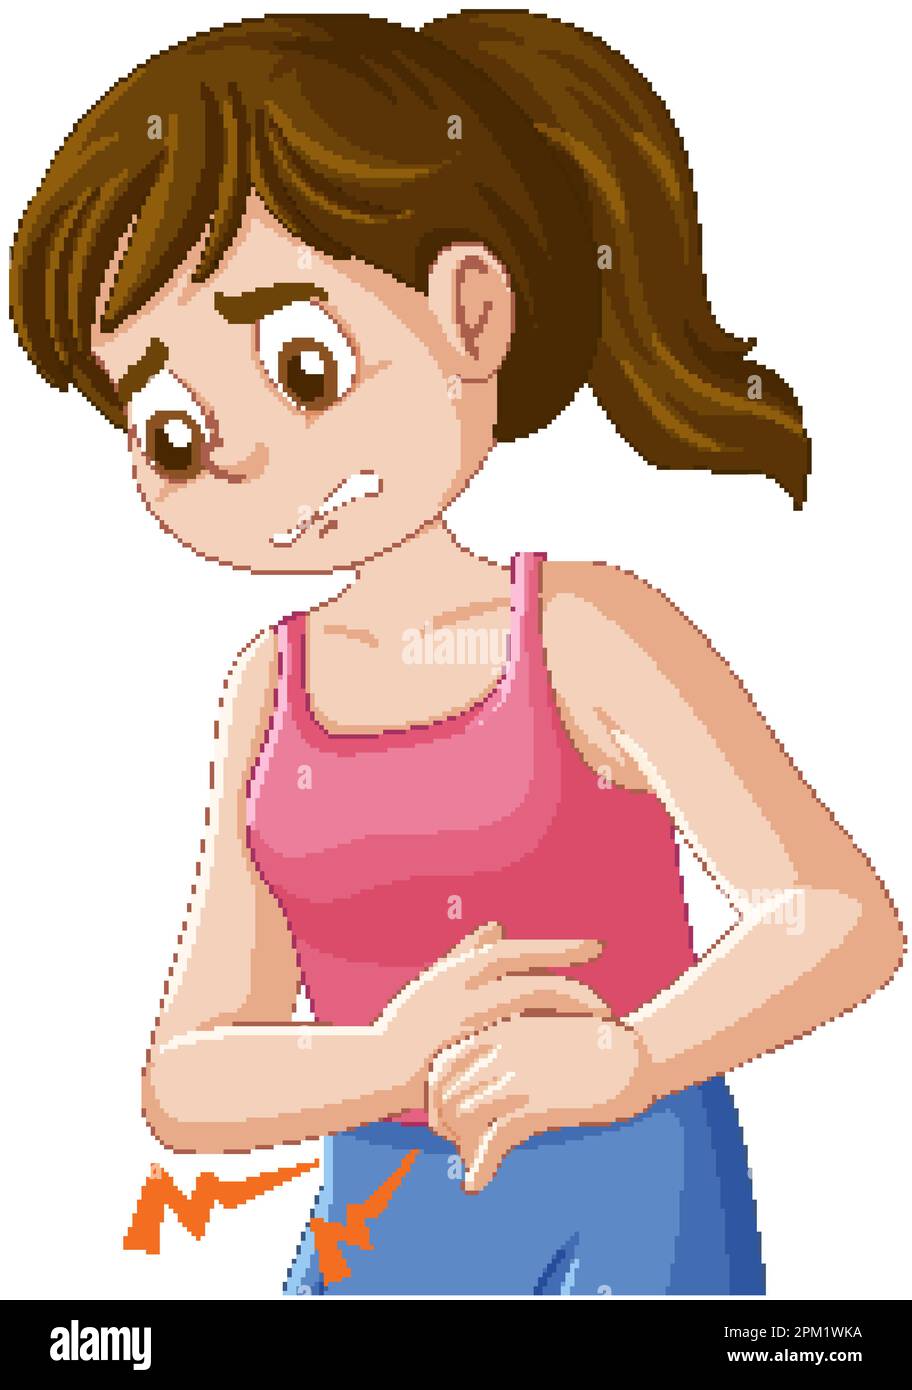 https://c8.alamy.com/comp/2PM1WKA/puberty-girl-having-stomach-cramps-illustration-2PM1WKA.jpg